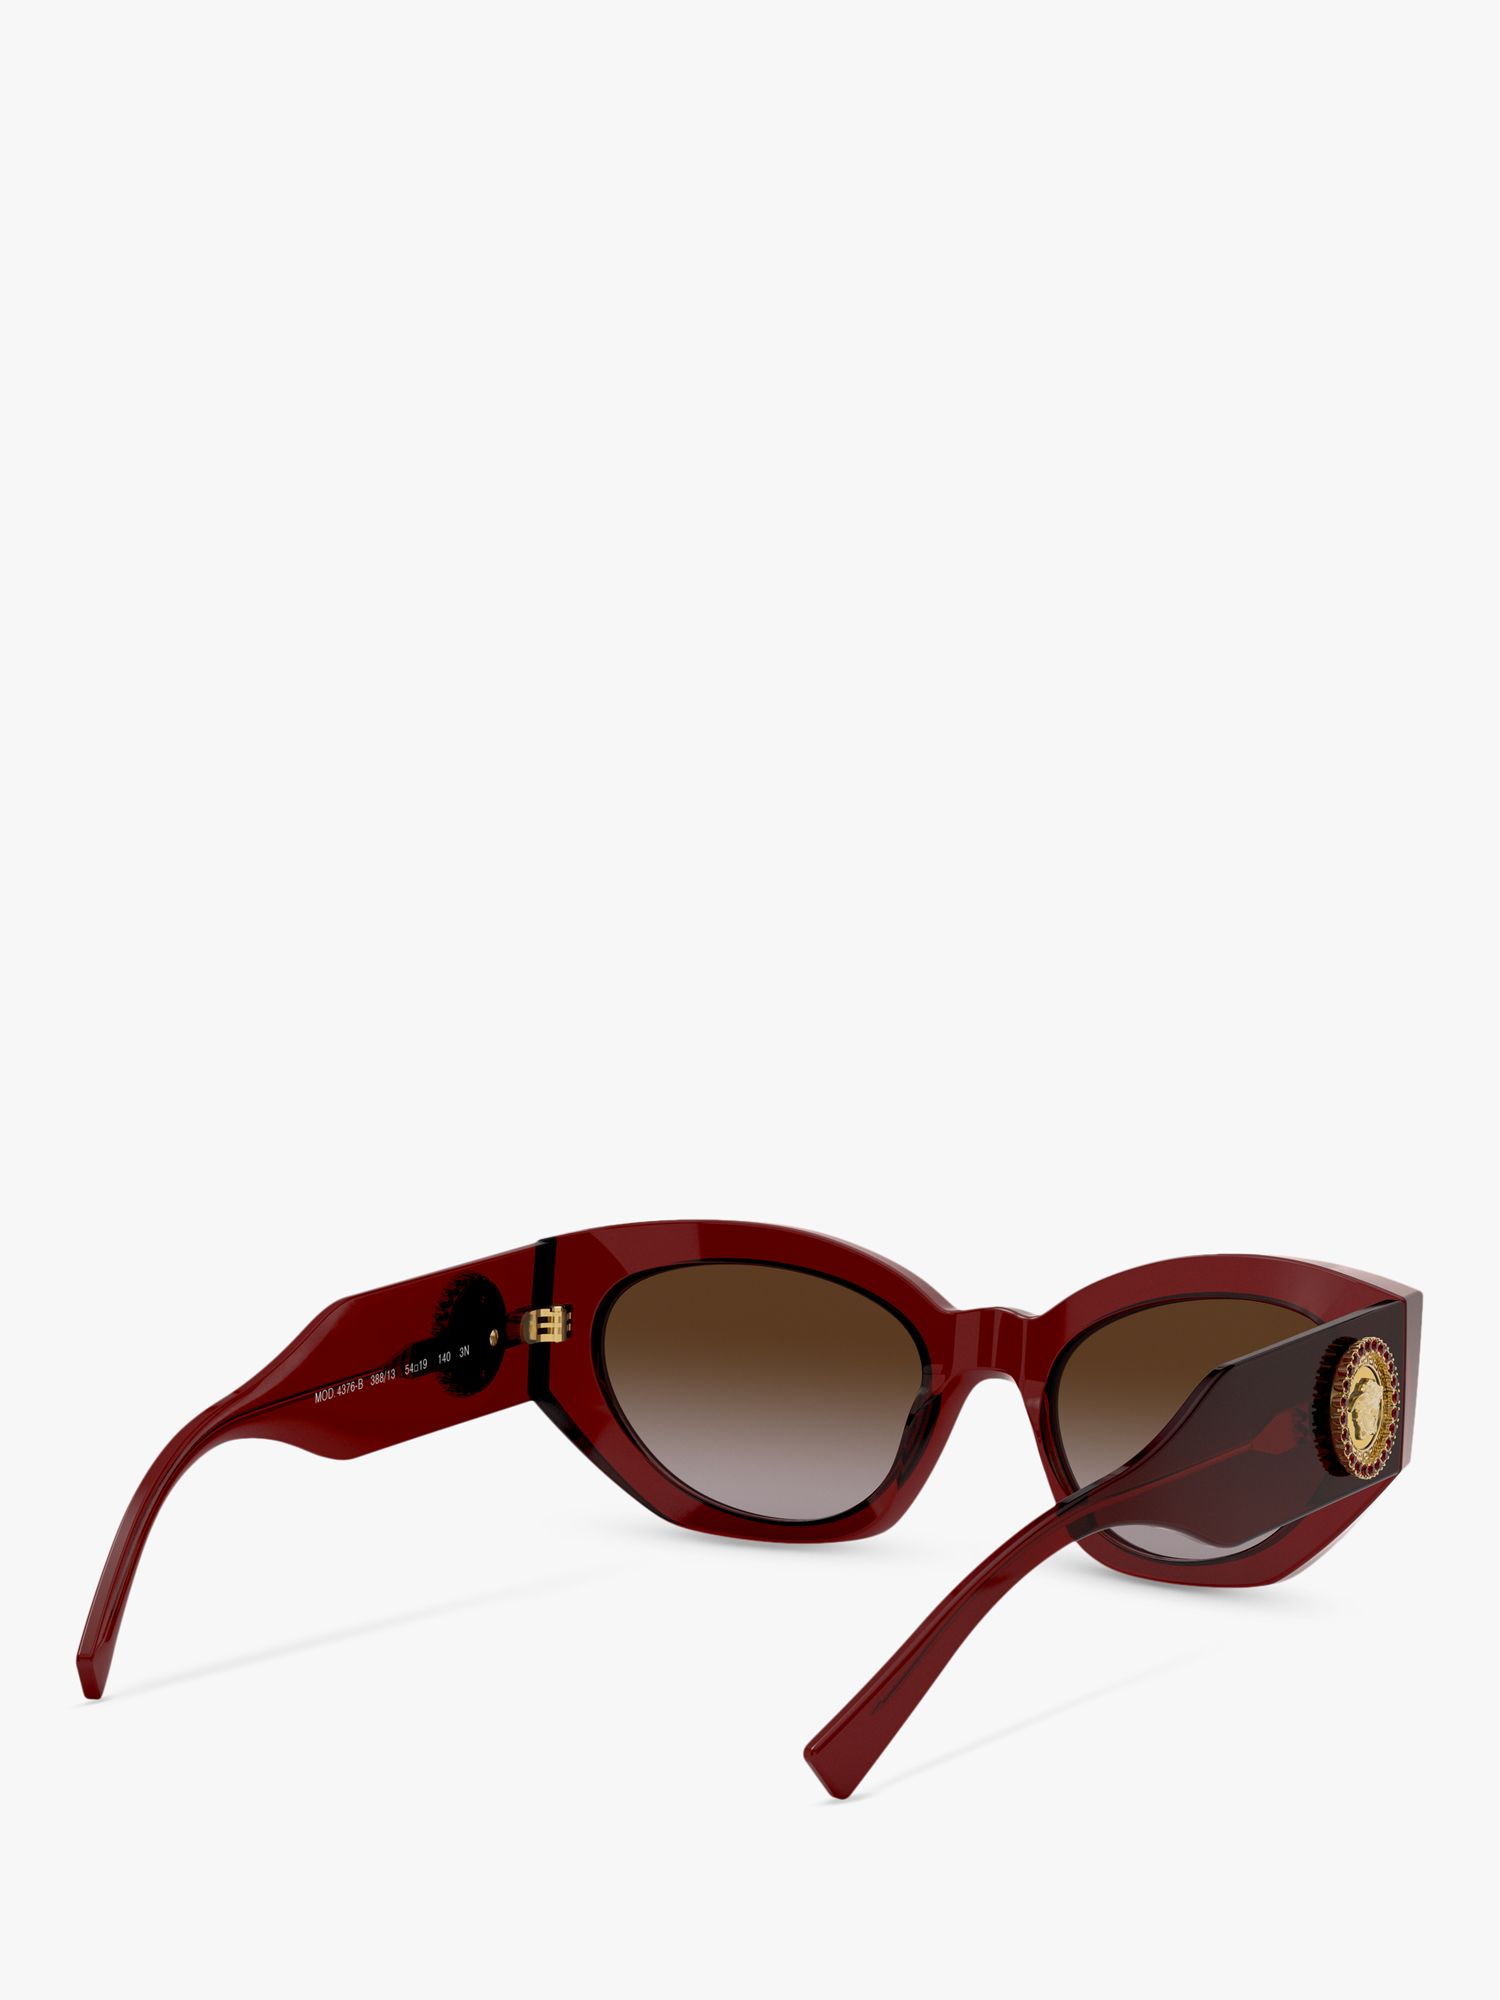 Versace VE4376B Women's Irregular Sunglasses, Burgundy/Brown Gradient ...